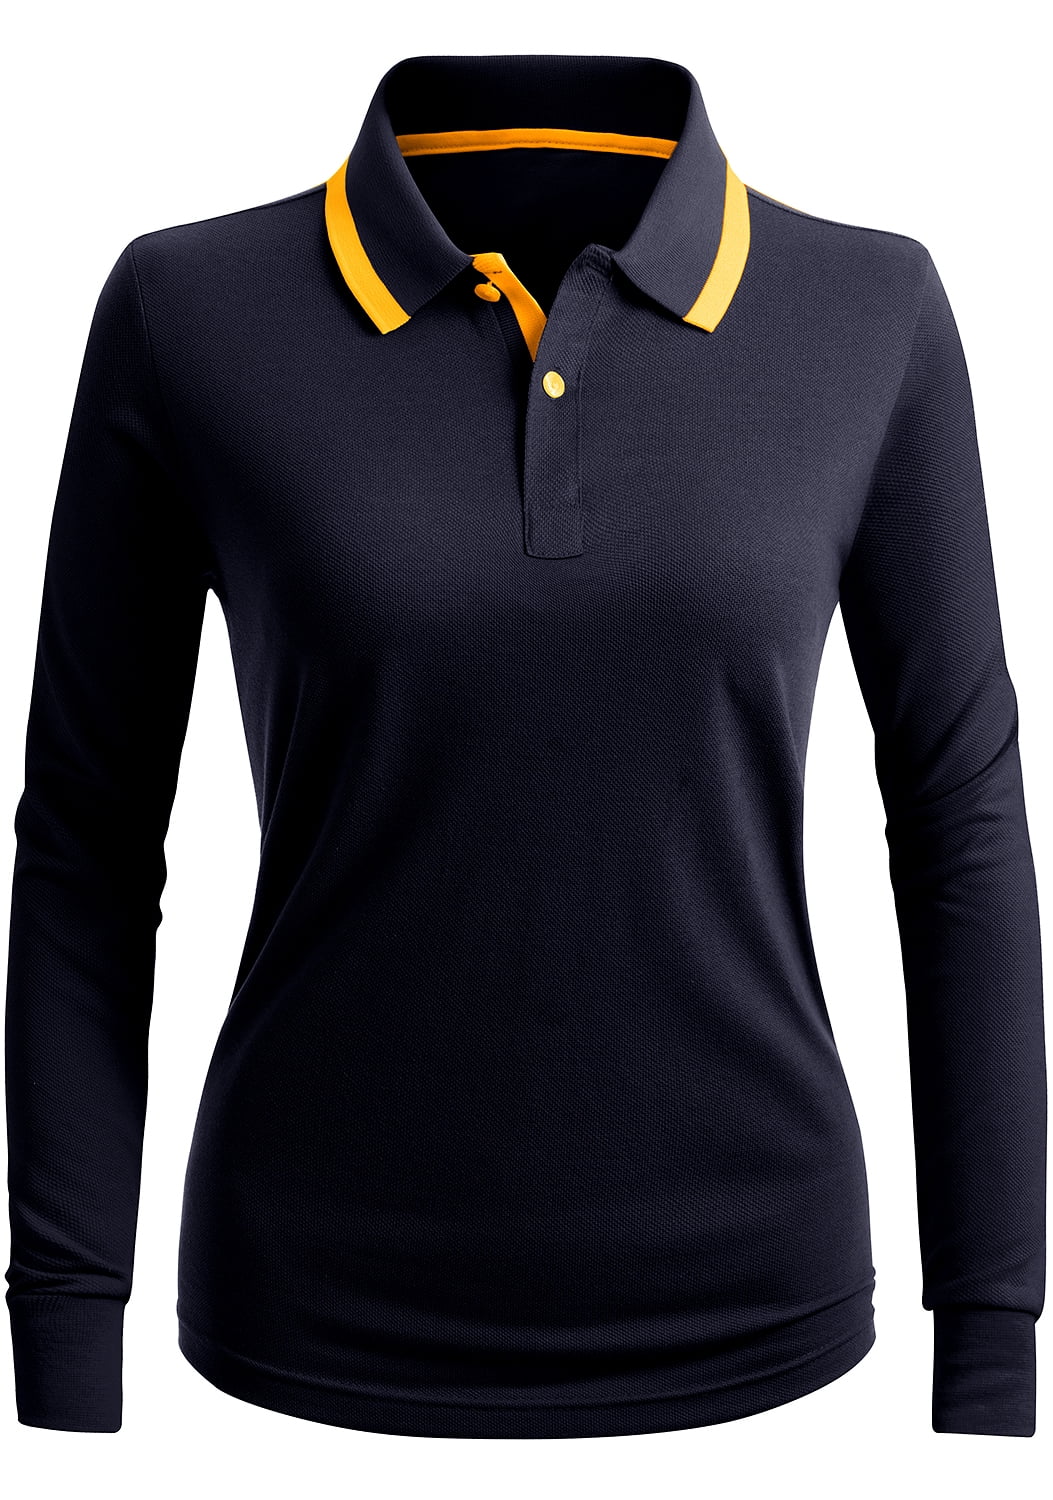 CLOVERY Women's Activewear Casual 2-Button Long Sleeve Polo Shirt (S ...